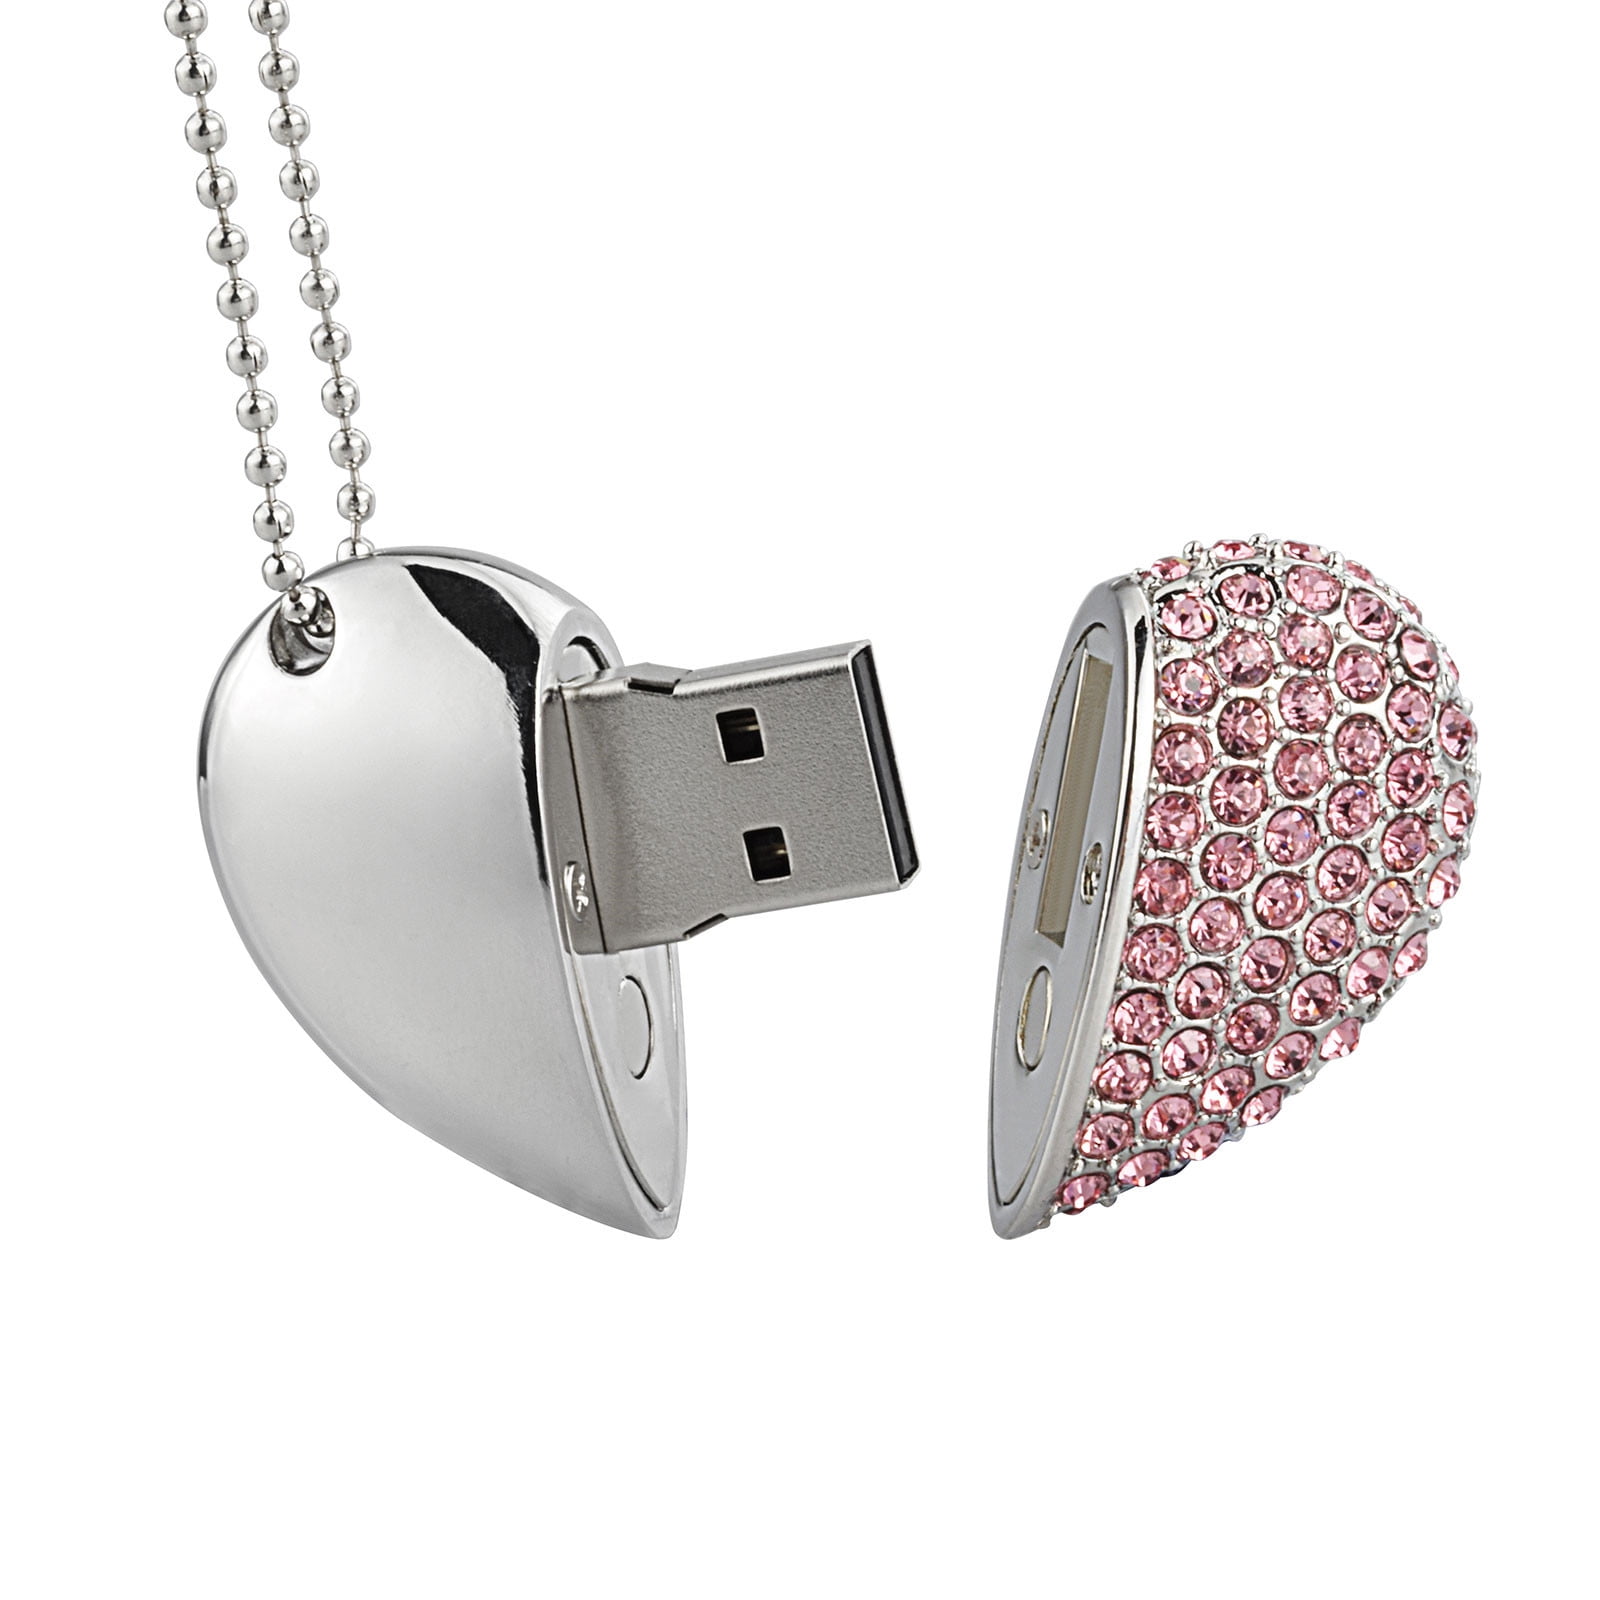 32GB Crystal USB Flash Drive Heart Shape Gift USB Drive RED 